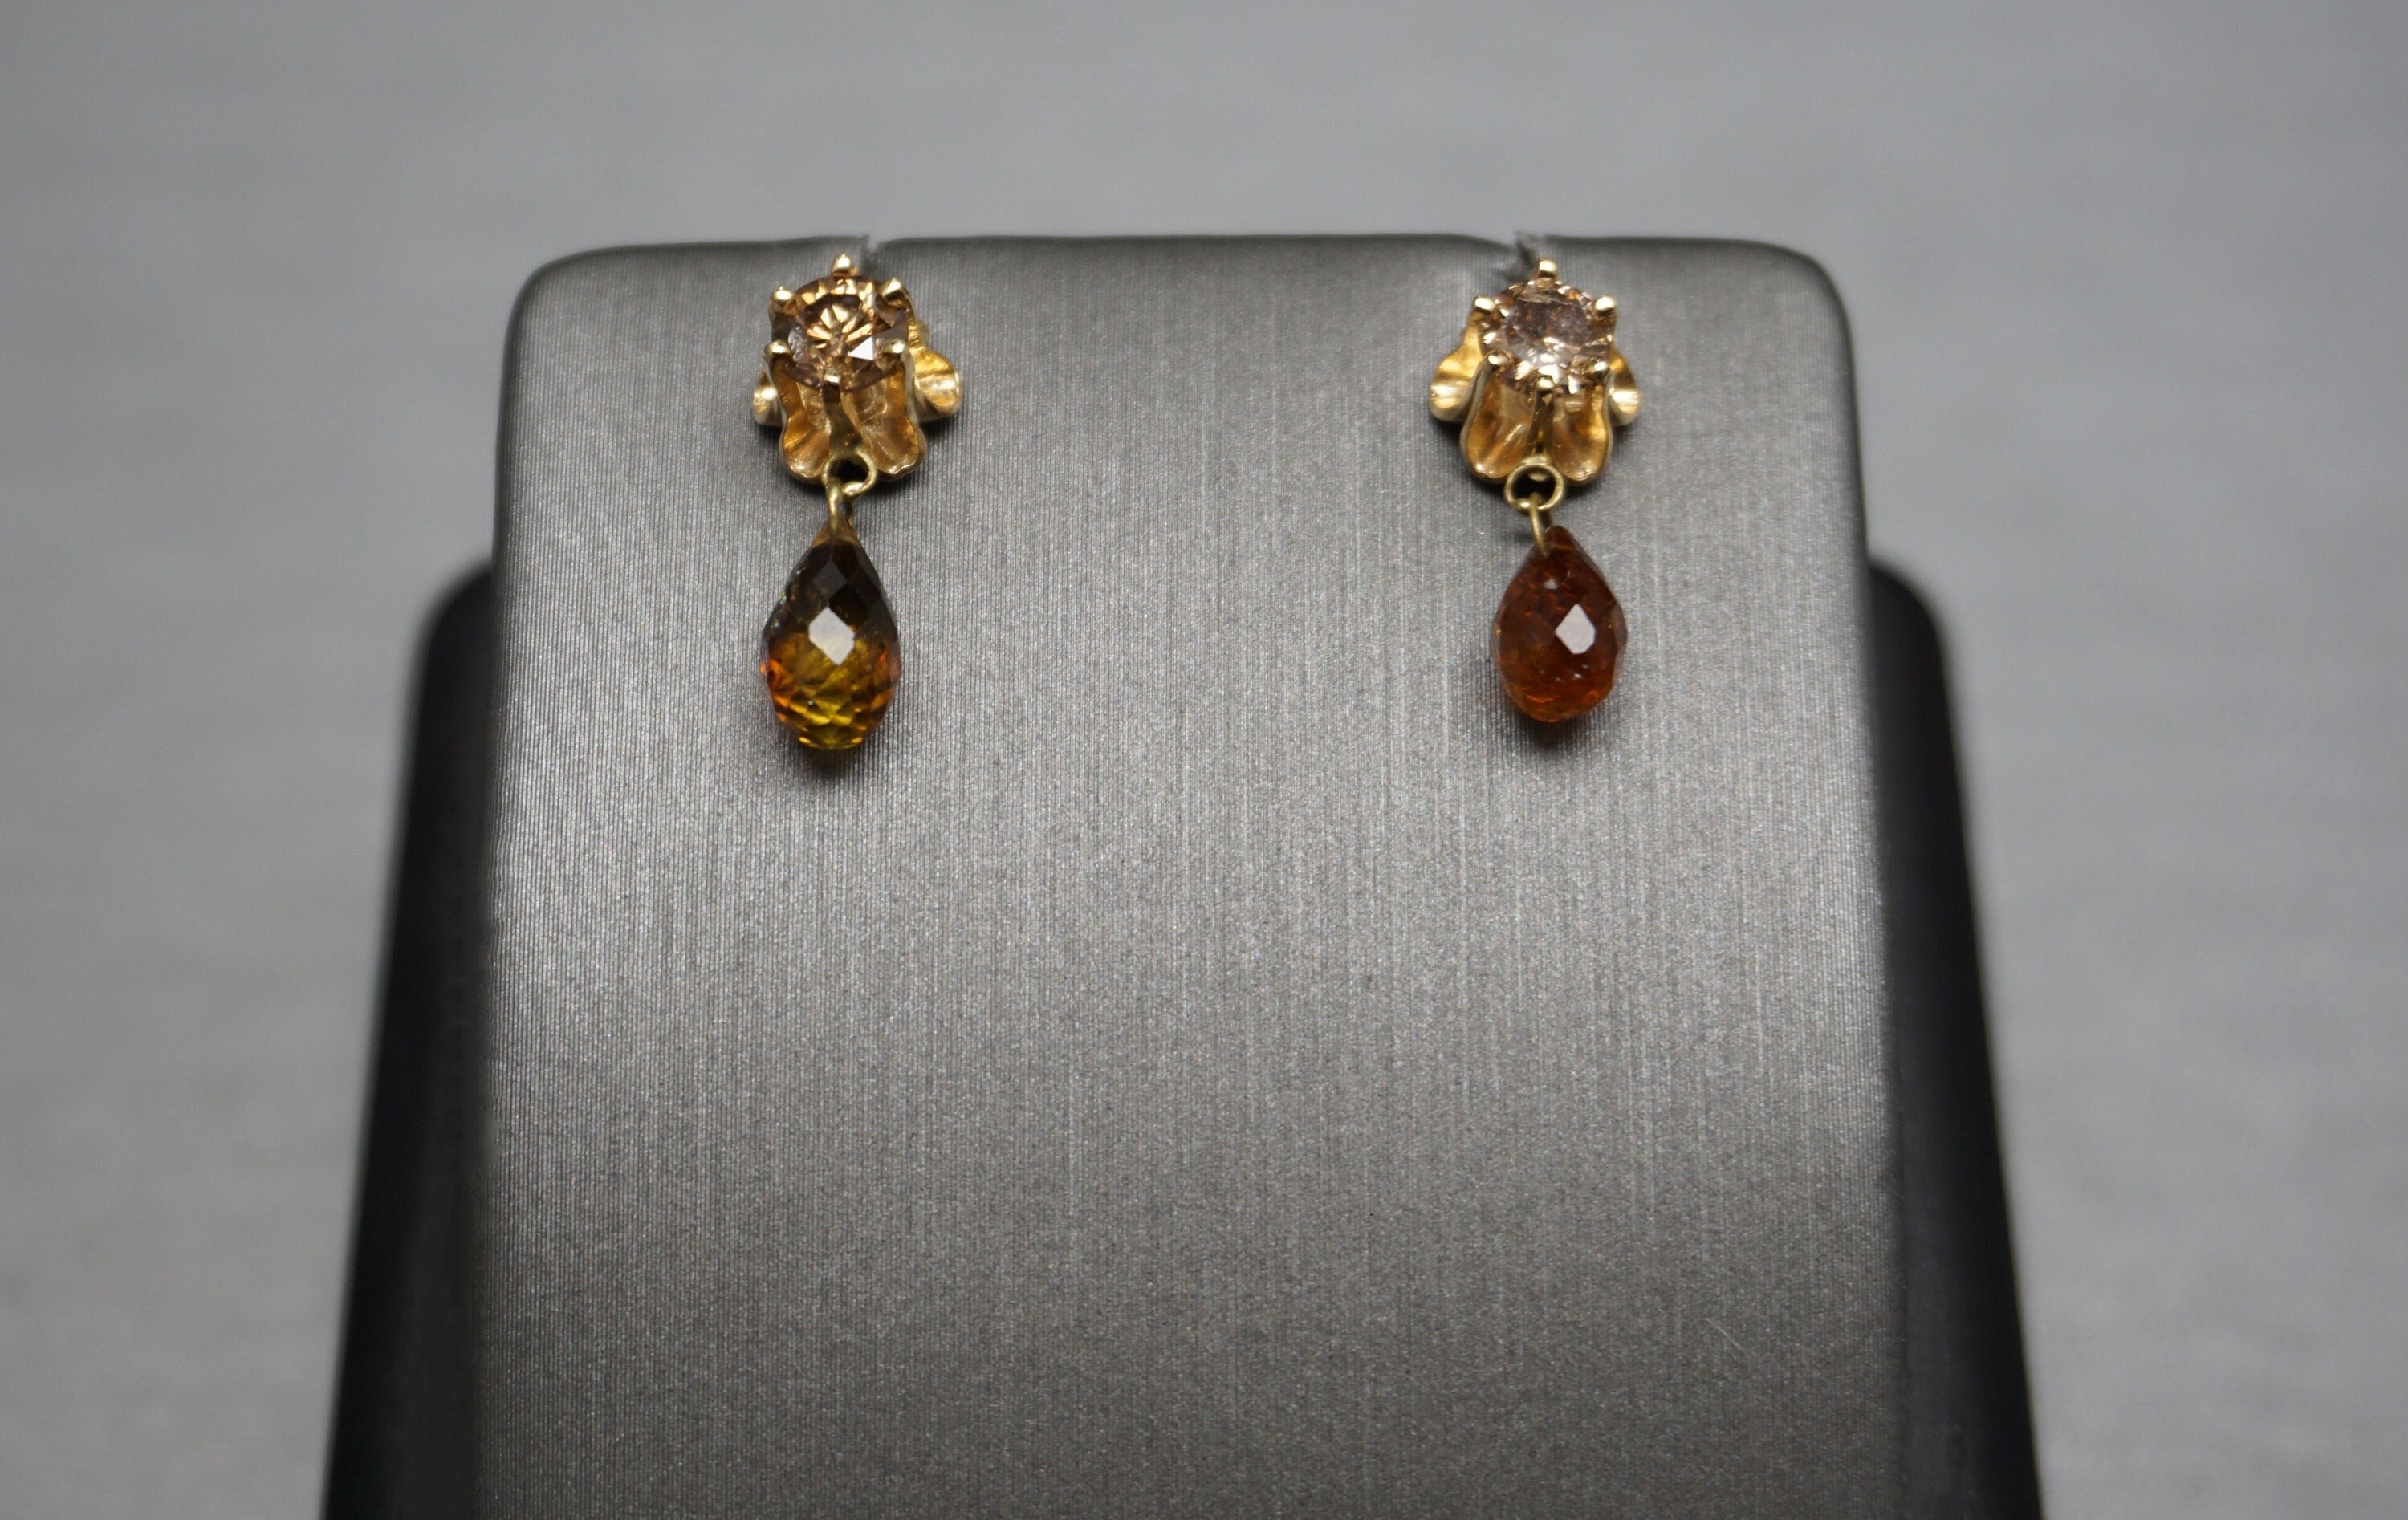 Vintage Diamond Mid Century Earrings Style - 1960's Buttercup Stud Diamond Earrings in 14 Karat White Gold